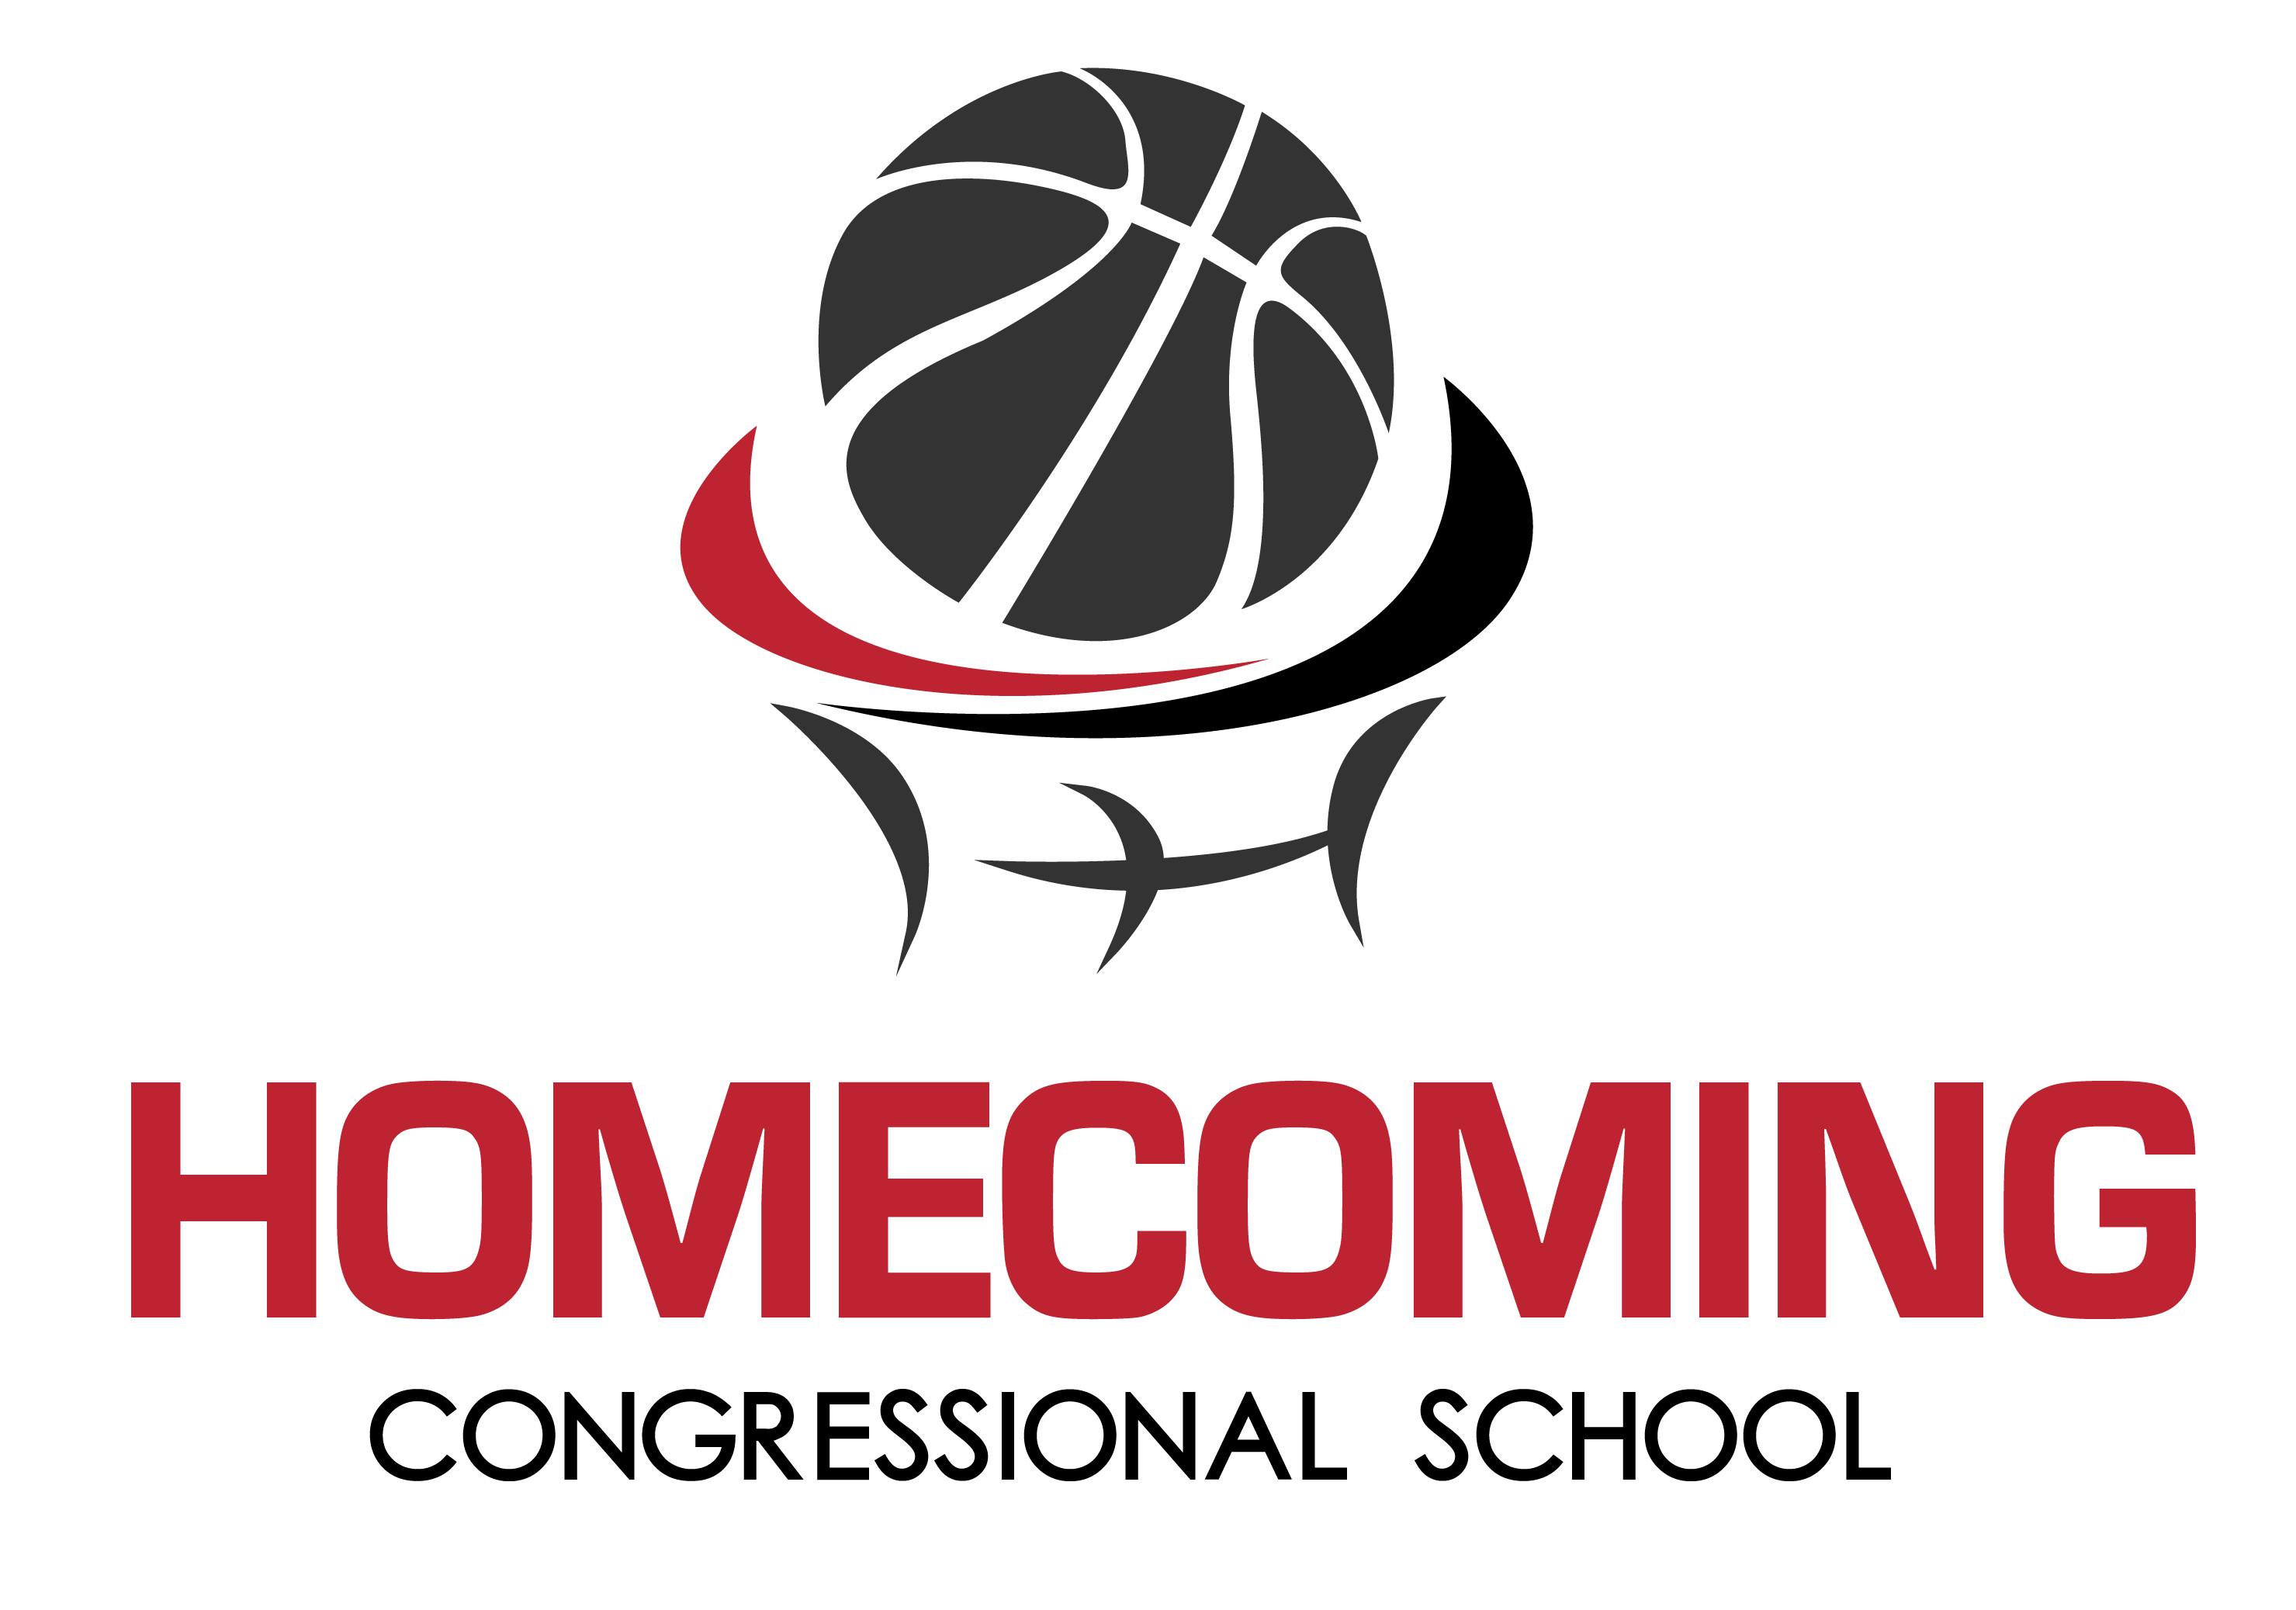 2018 Logo - Homecoming 2018 Logo-01 - Congressional School